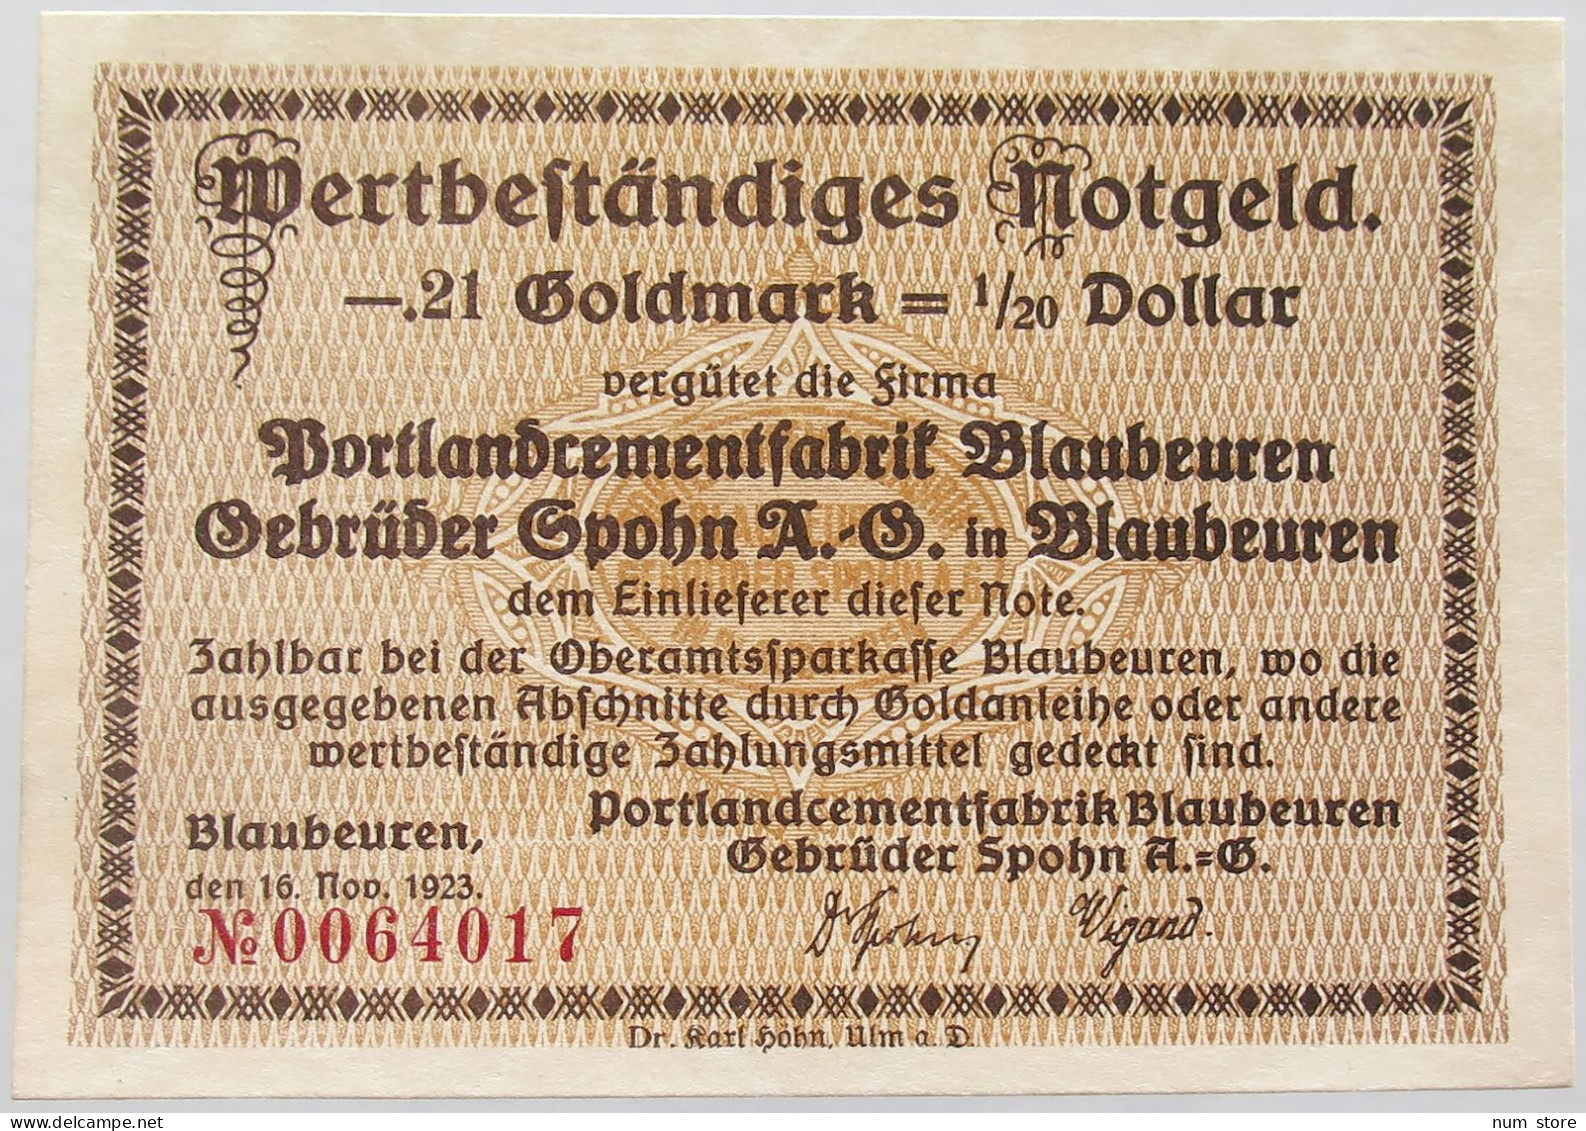 GERMANY 0.21 GOLDMARK 1/20 DOLLAR 1923 BLAUBEUREN #alb002 0235 - Deutsche Golddiskontbank